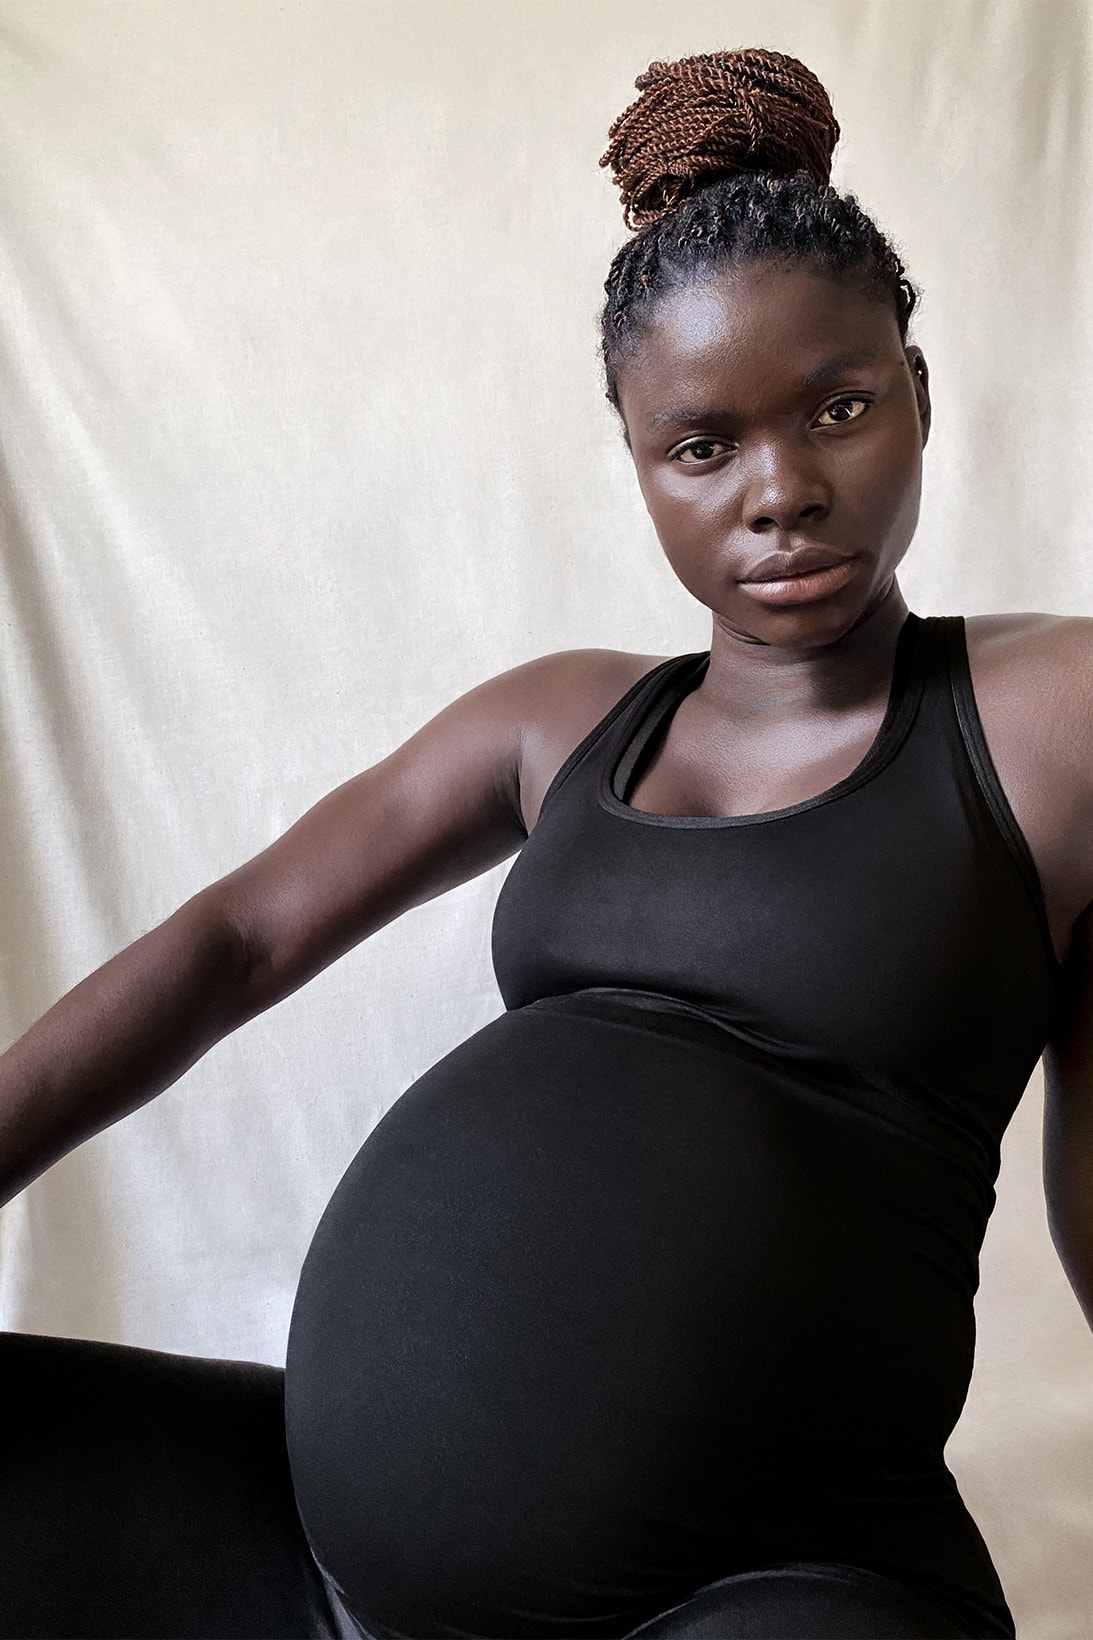 nike m maternity wear launch pregnant mothers moms postpartum inclusivity diversity bras tank tops leggings tights